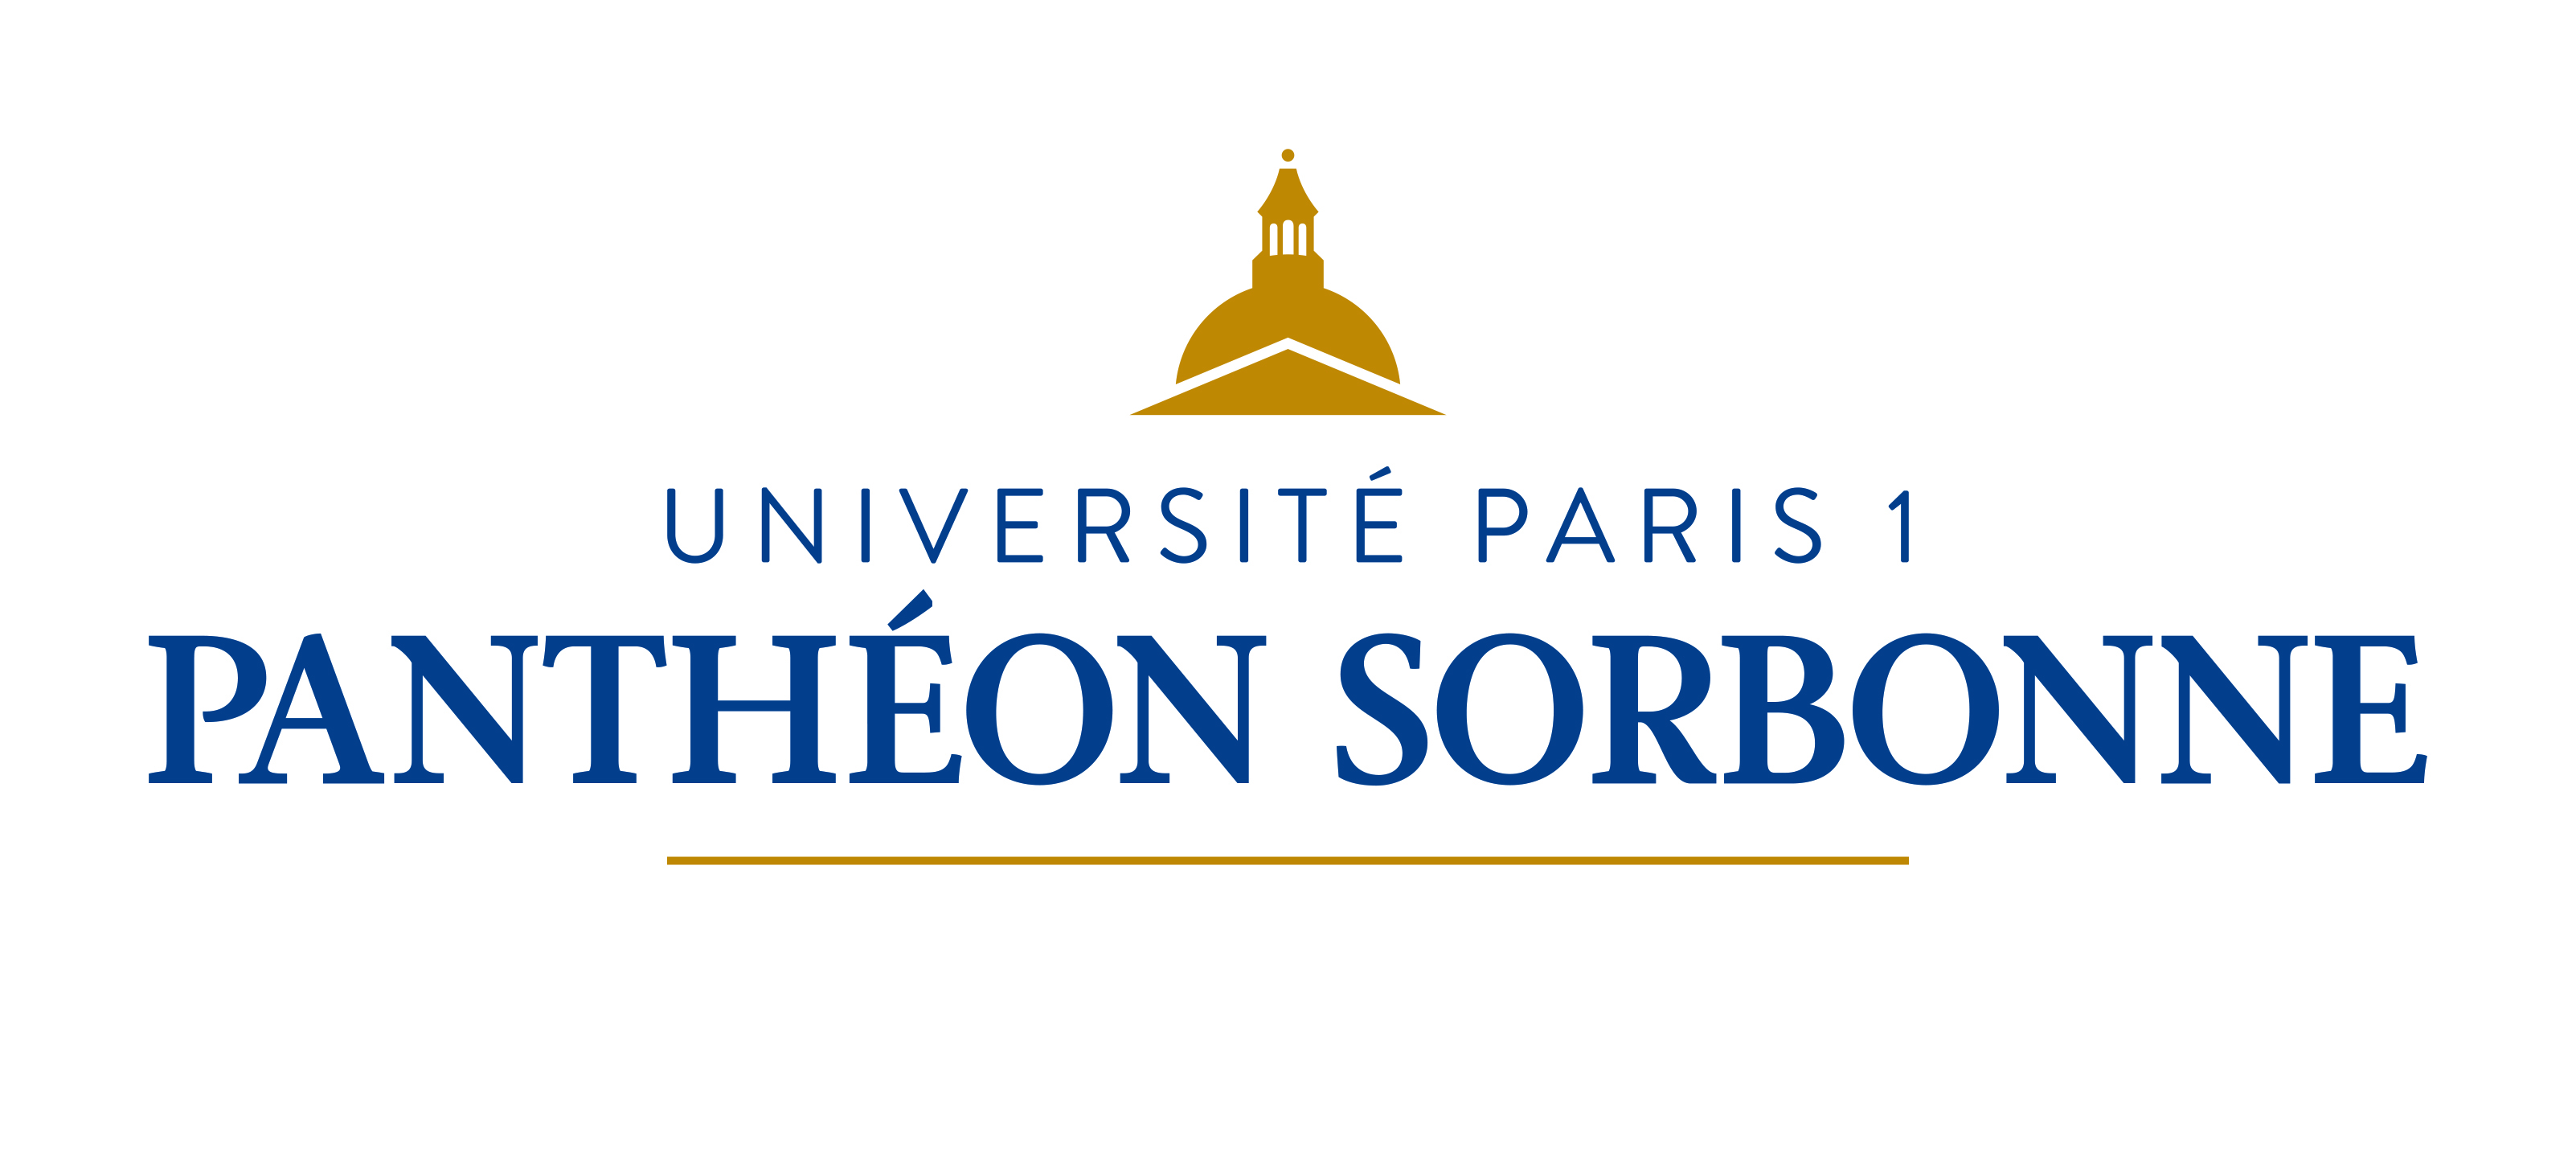 Pantheon Sorbonne logo